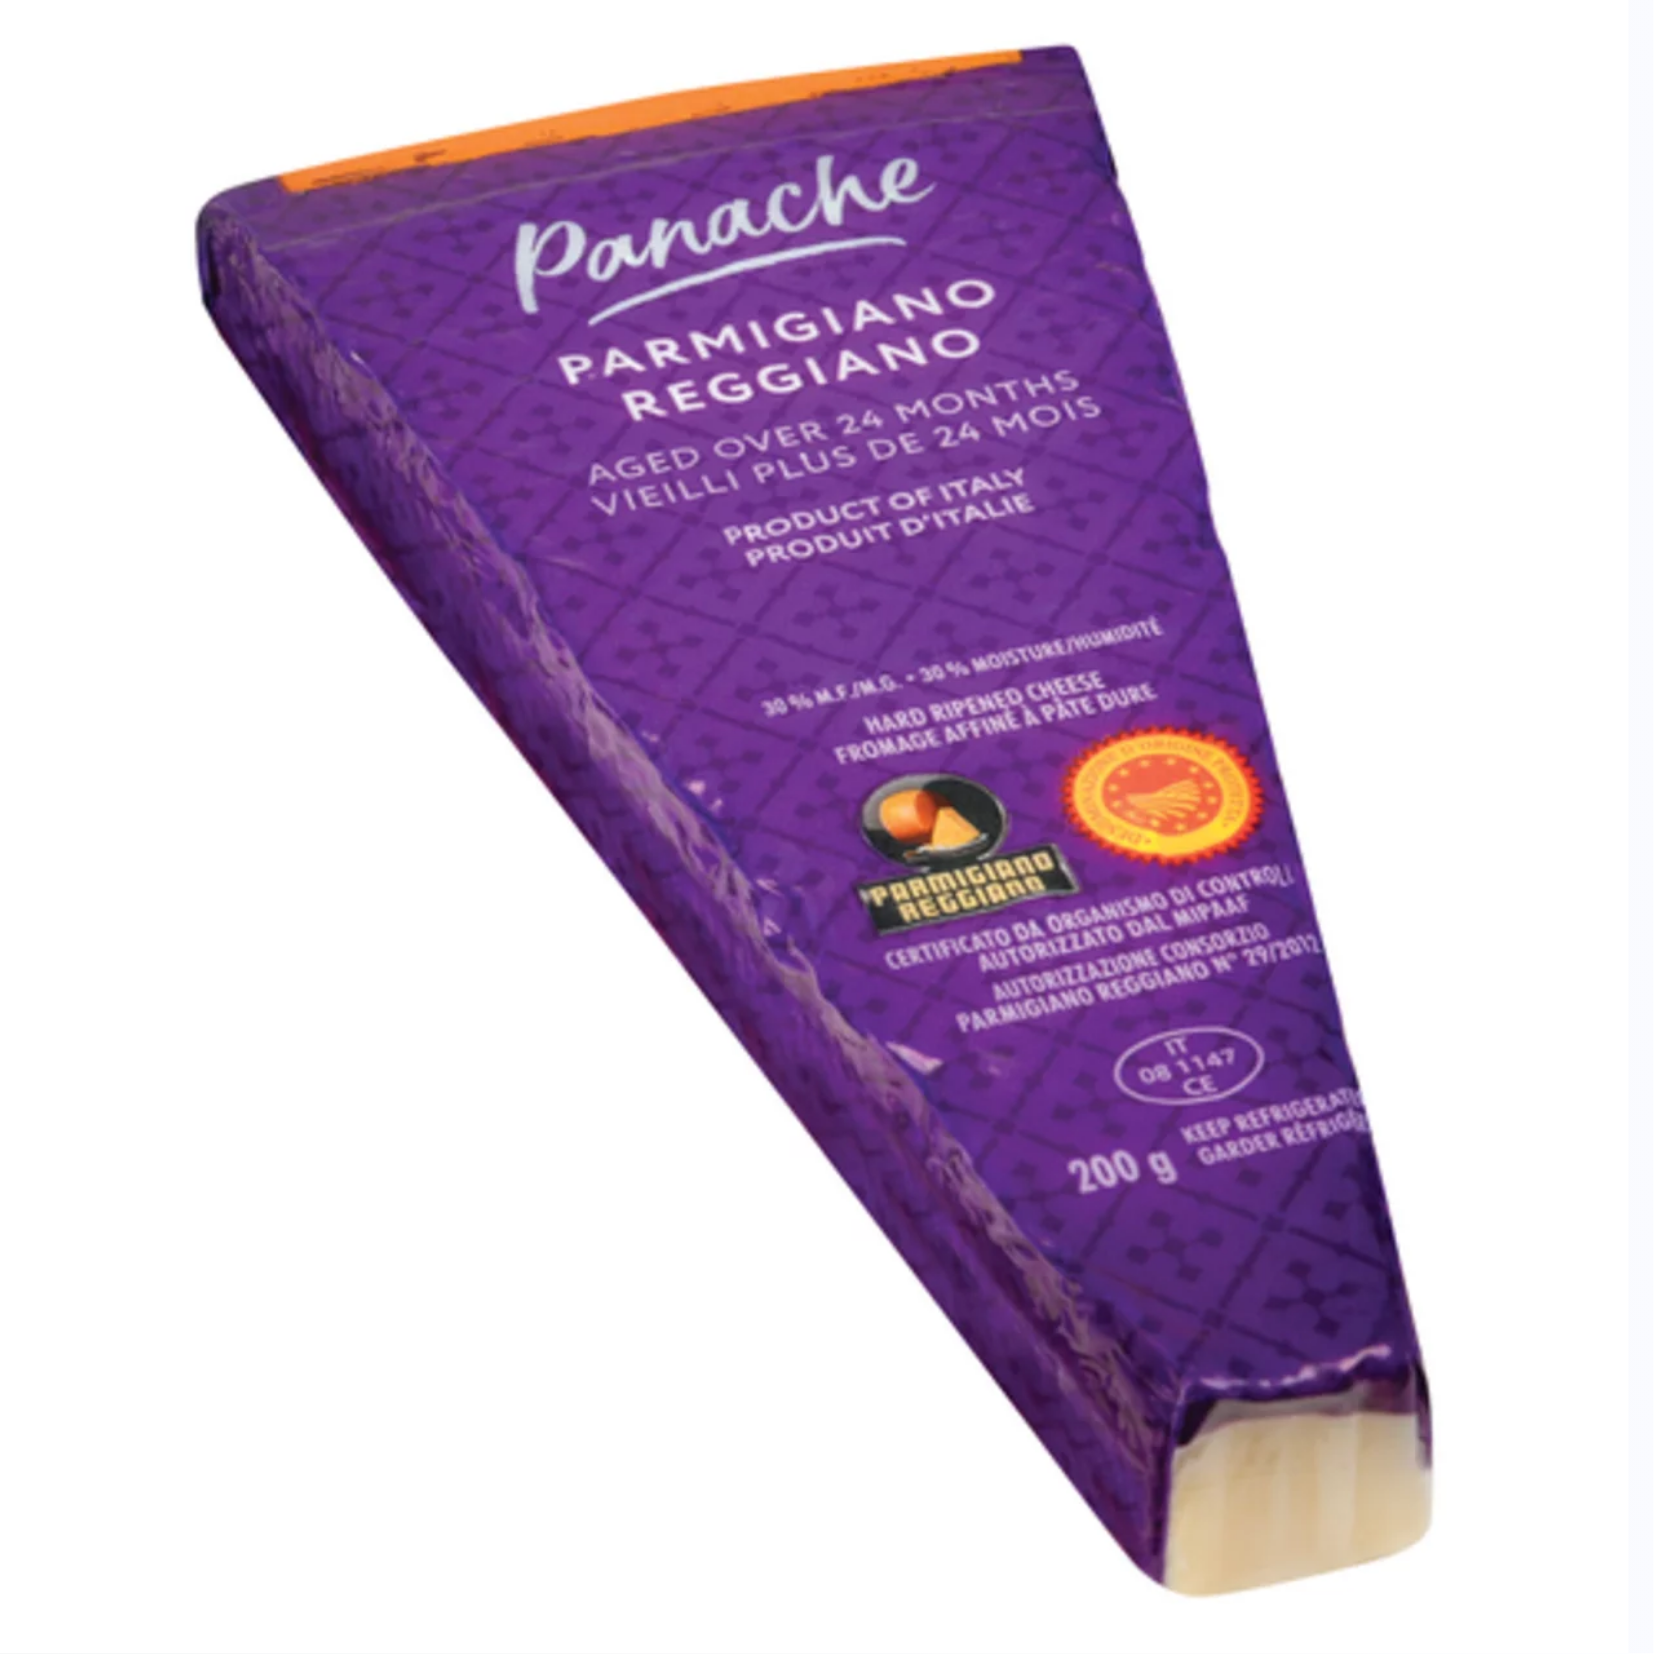 Panache Parmigiano Reggiano Cheese 200g